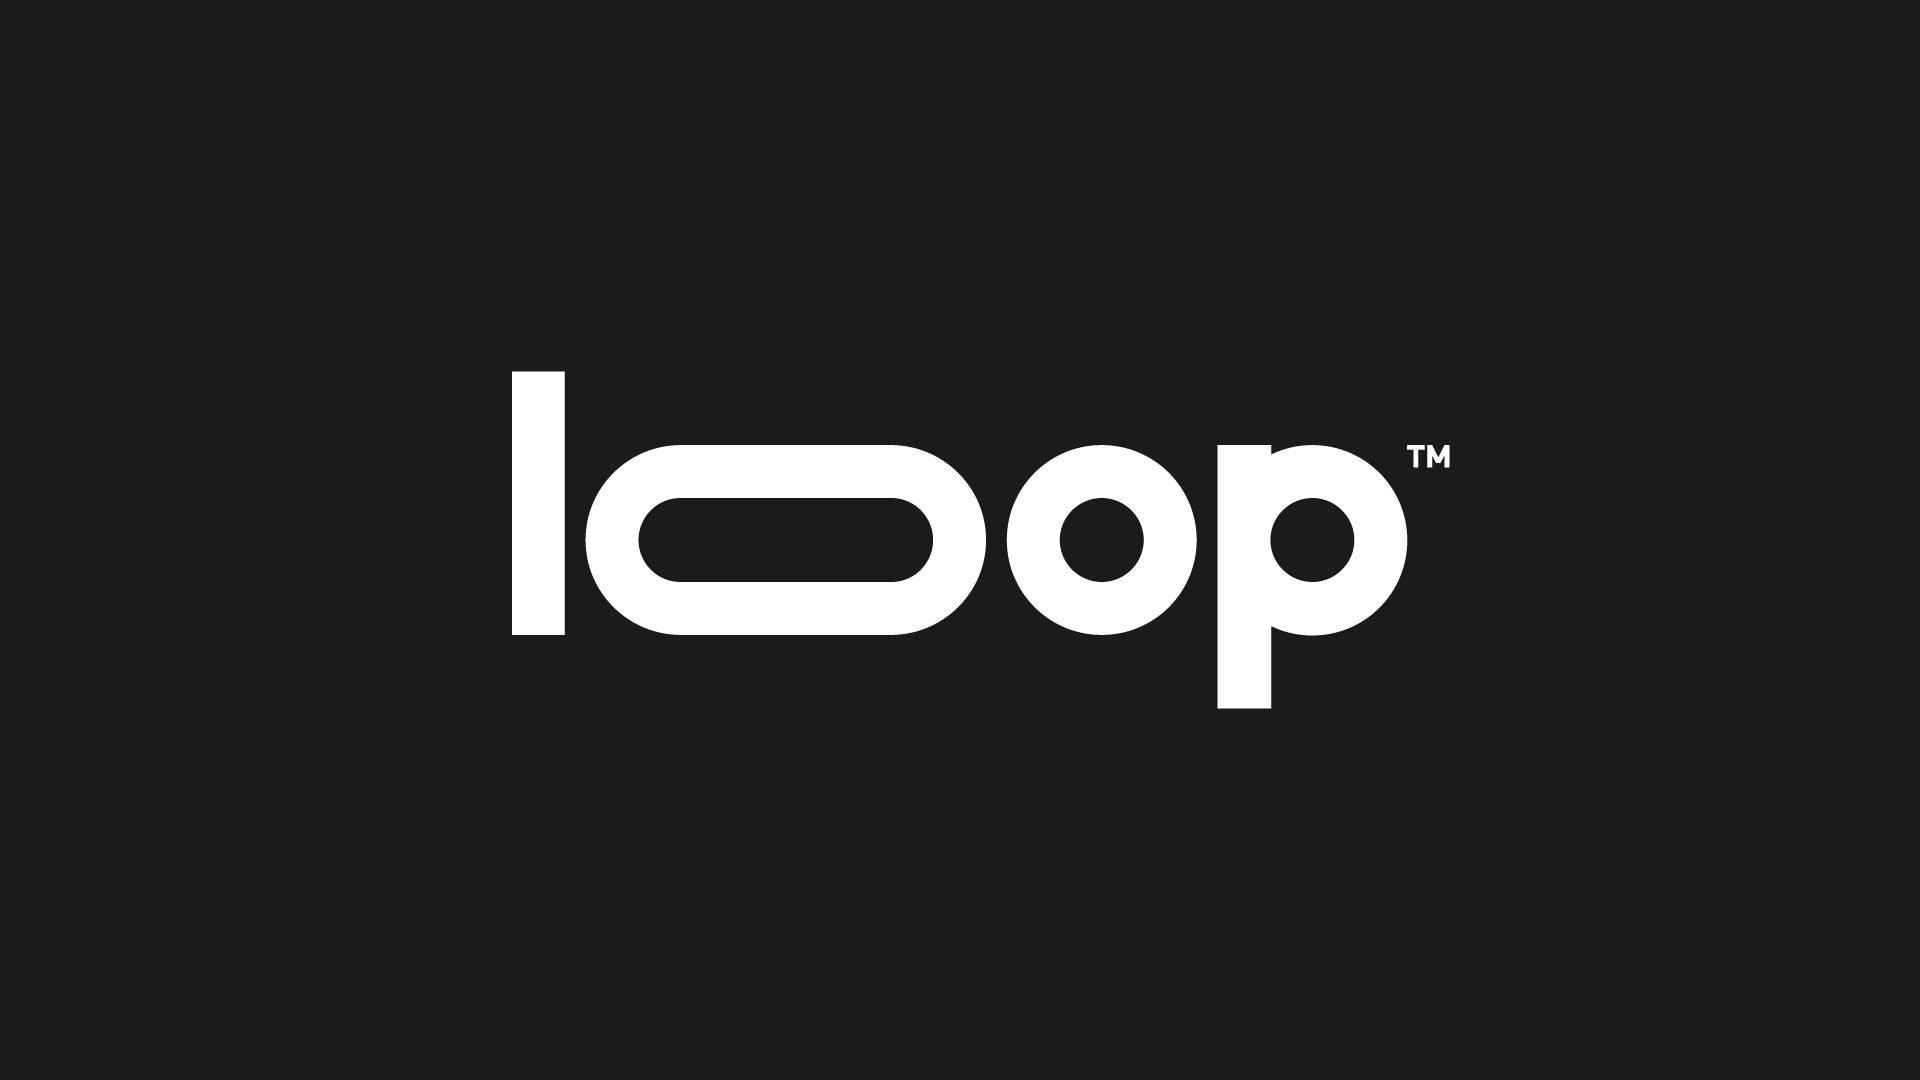 Loop Logo Background Image